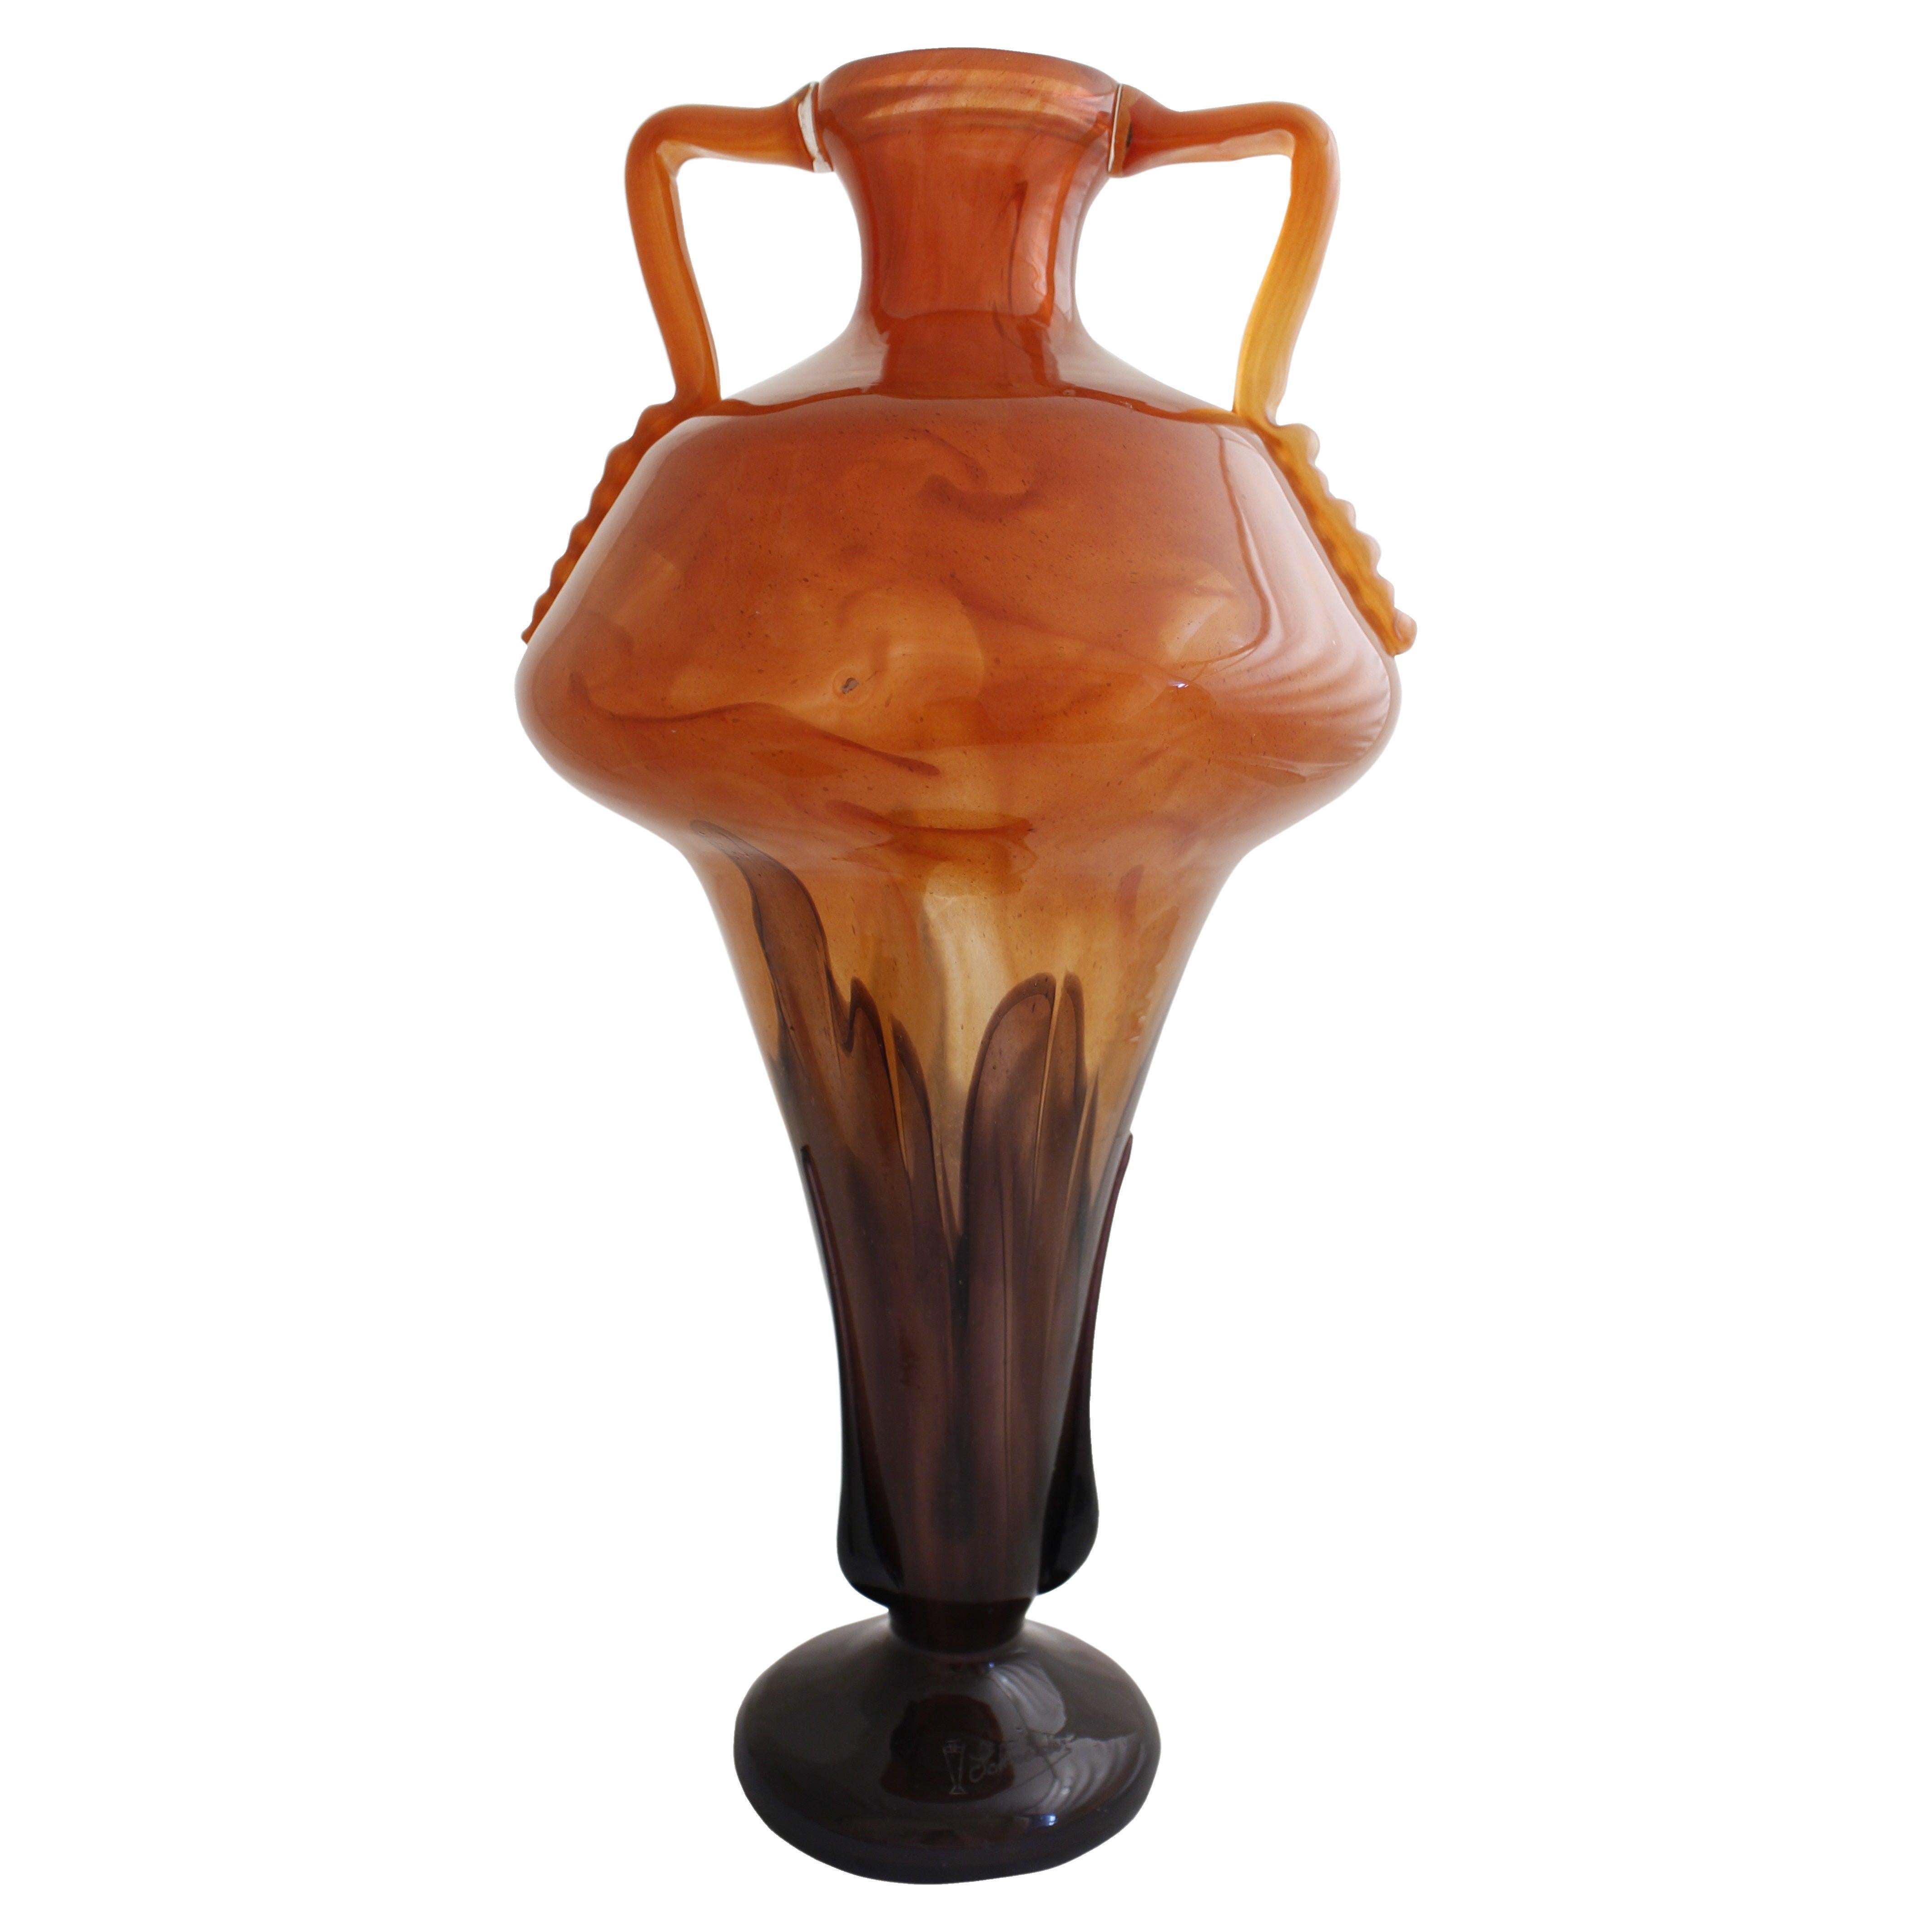  Unusual Vase Schneider With applications, France, Marbré decoration, 1922 For Sale